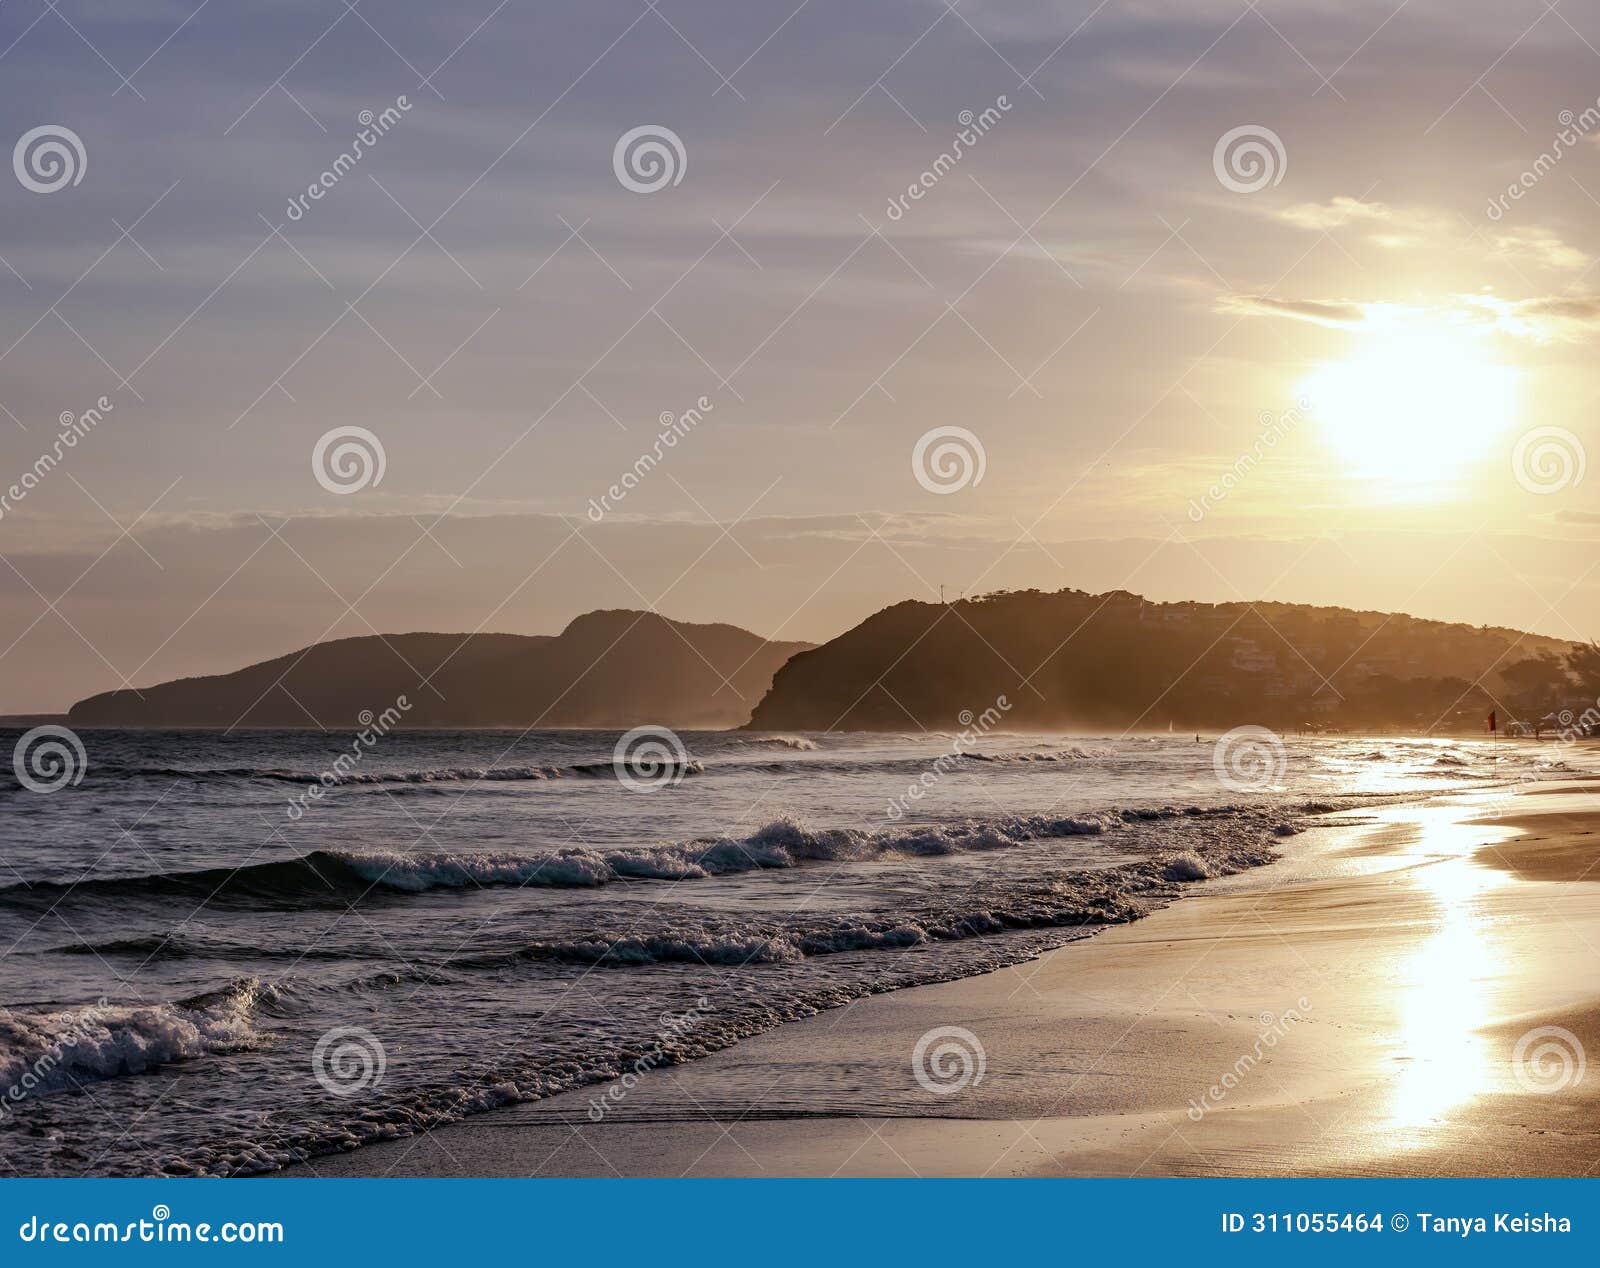 waves of the atlantic ocean at geriba beach on sunset in buzios